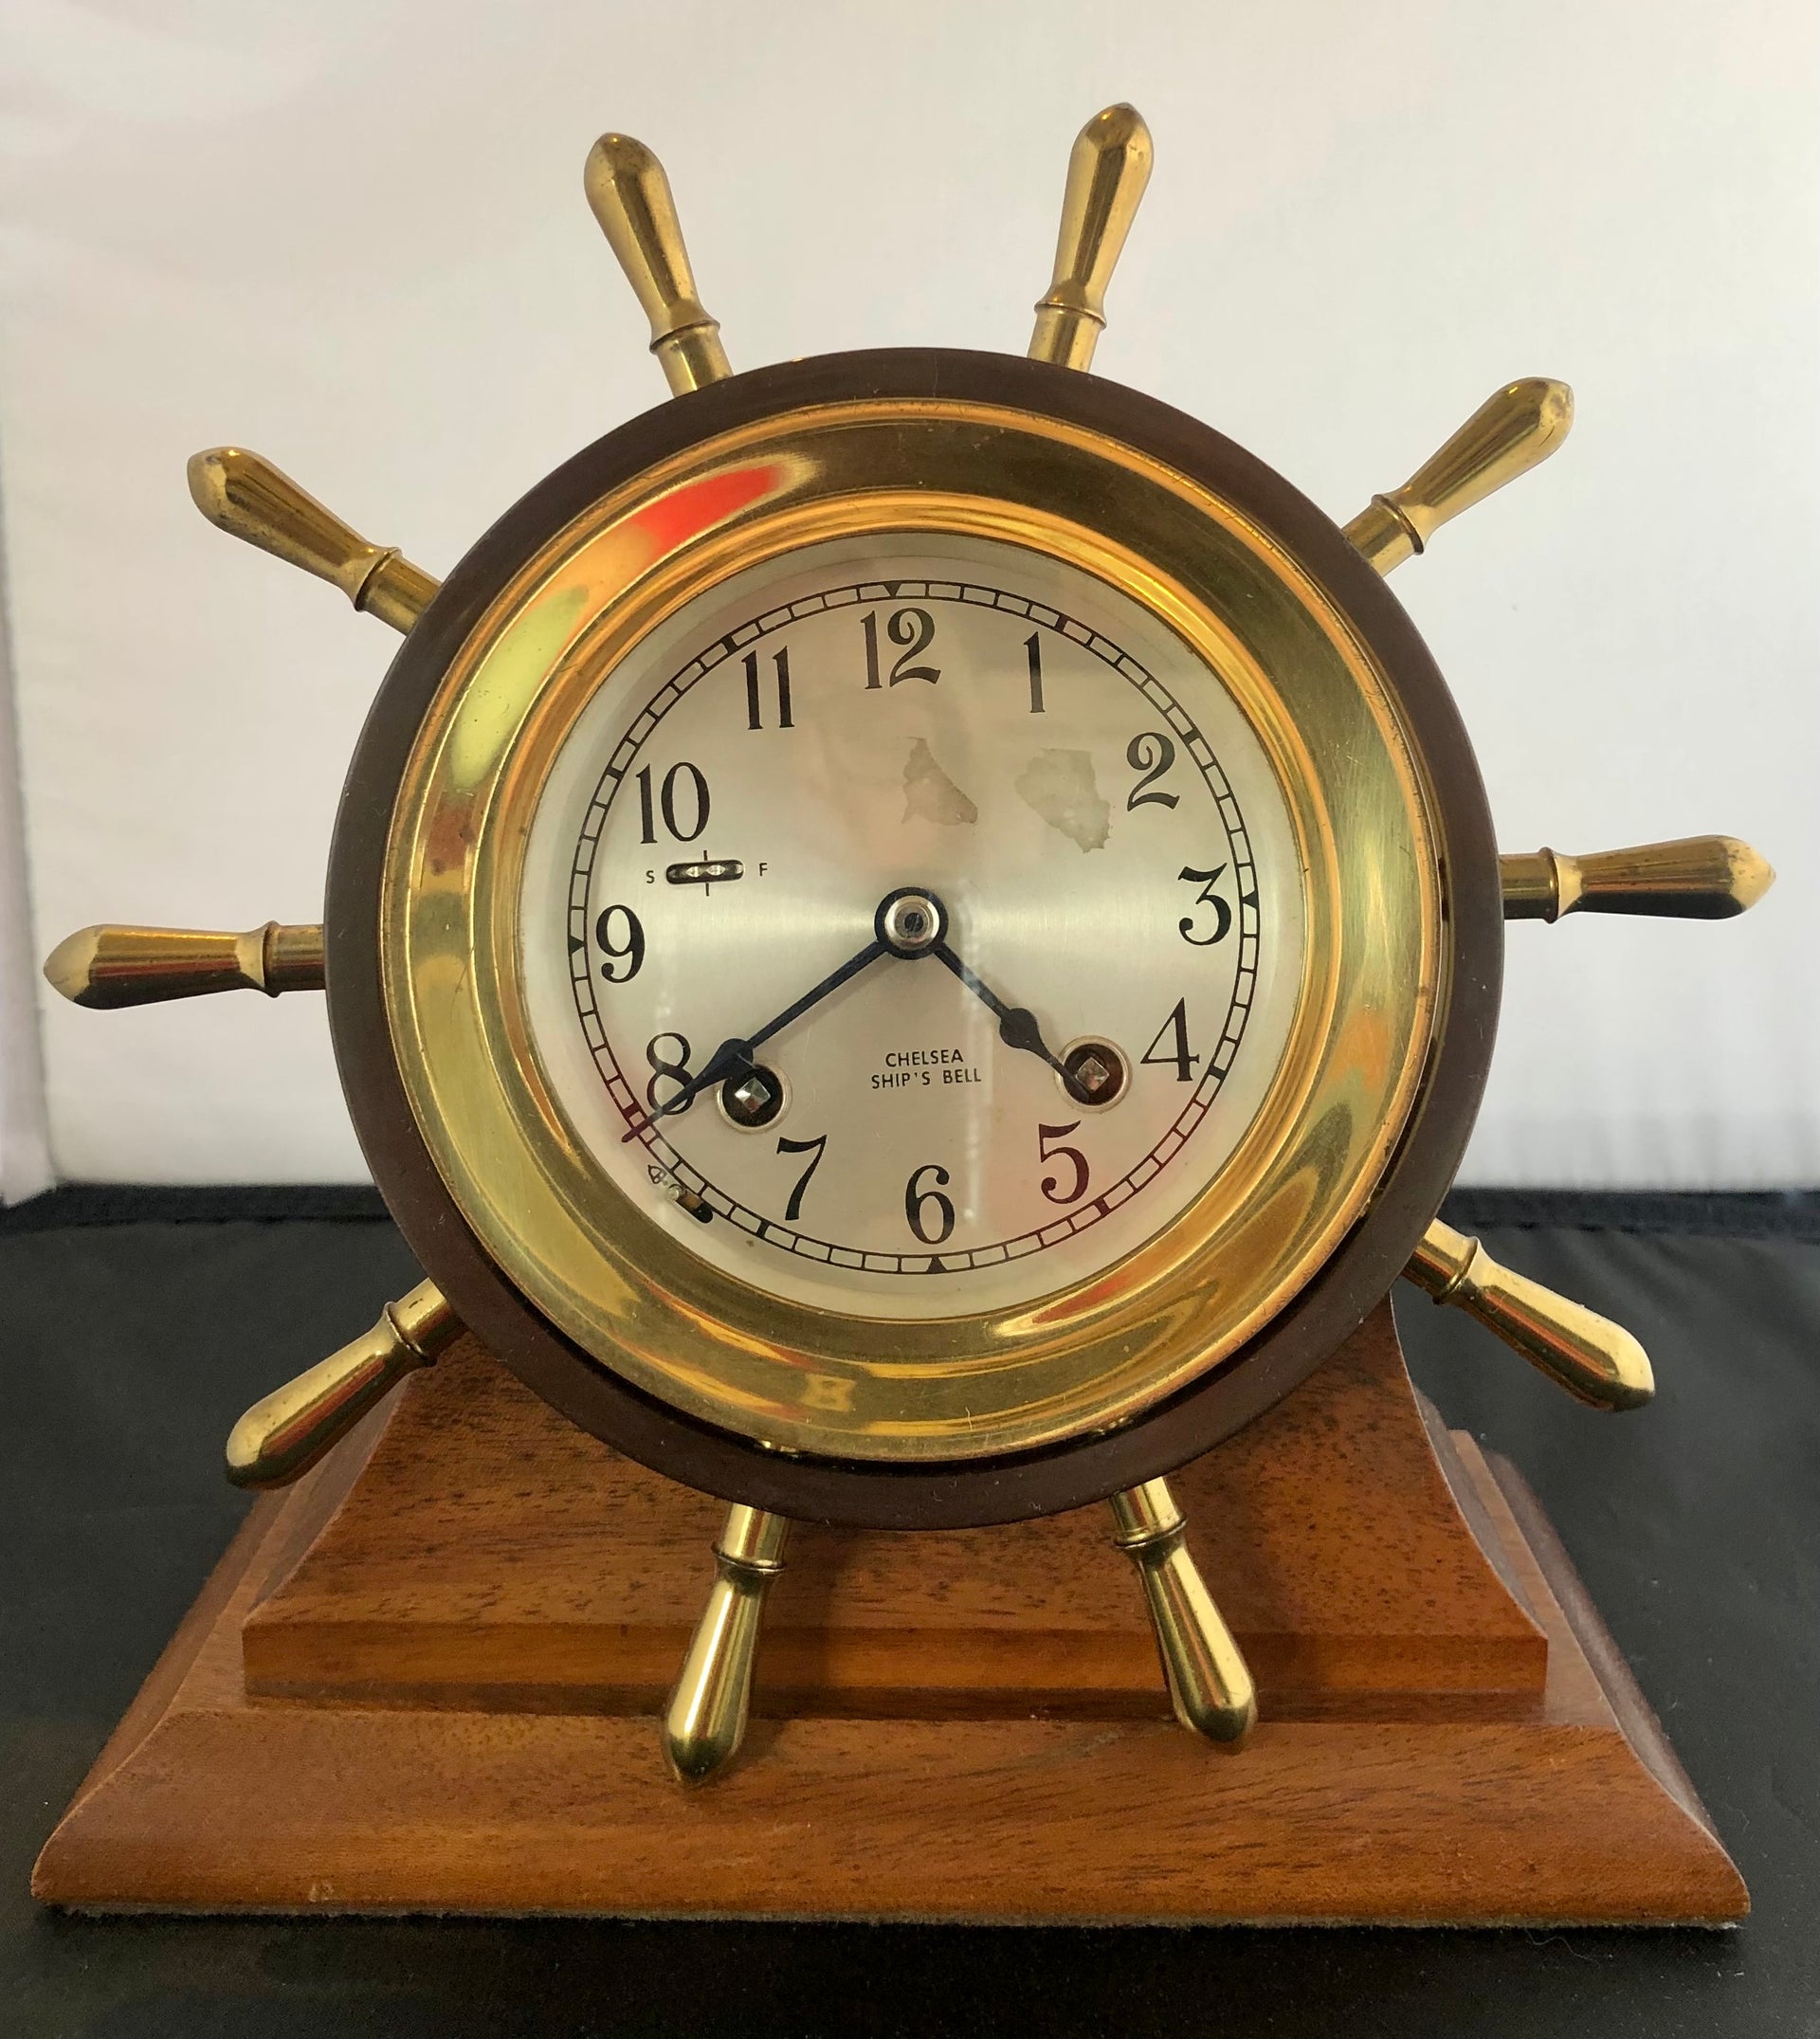 Second Life Marketplace - NAUTICA SHIP'S WHEEL CLOCK, Nautical Clock,  Maritime Clock, Ships Wheel clock